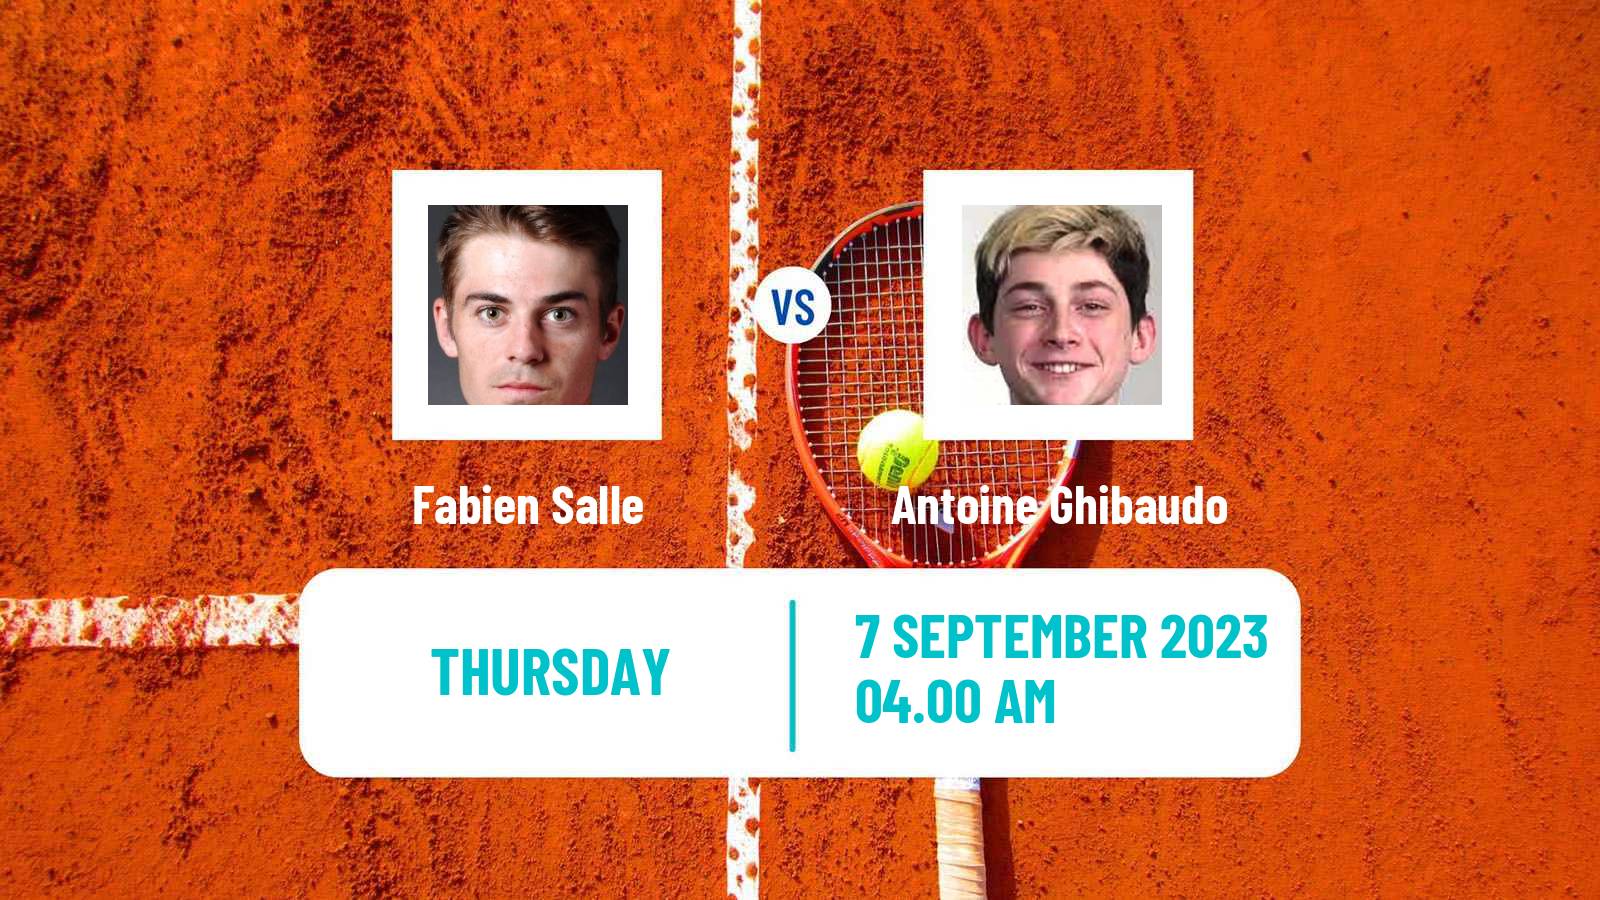 Tennis ITF M15 Monastir 36 Men Fabien Salle - Antoine Ghibaudo